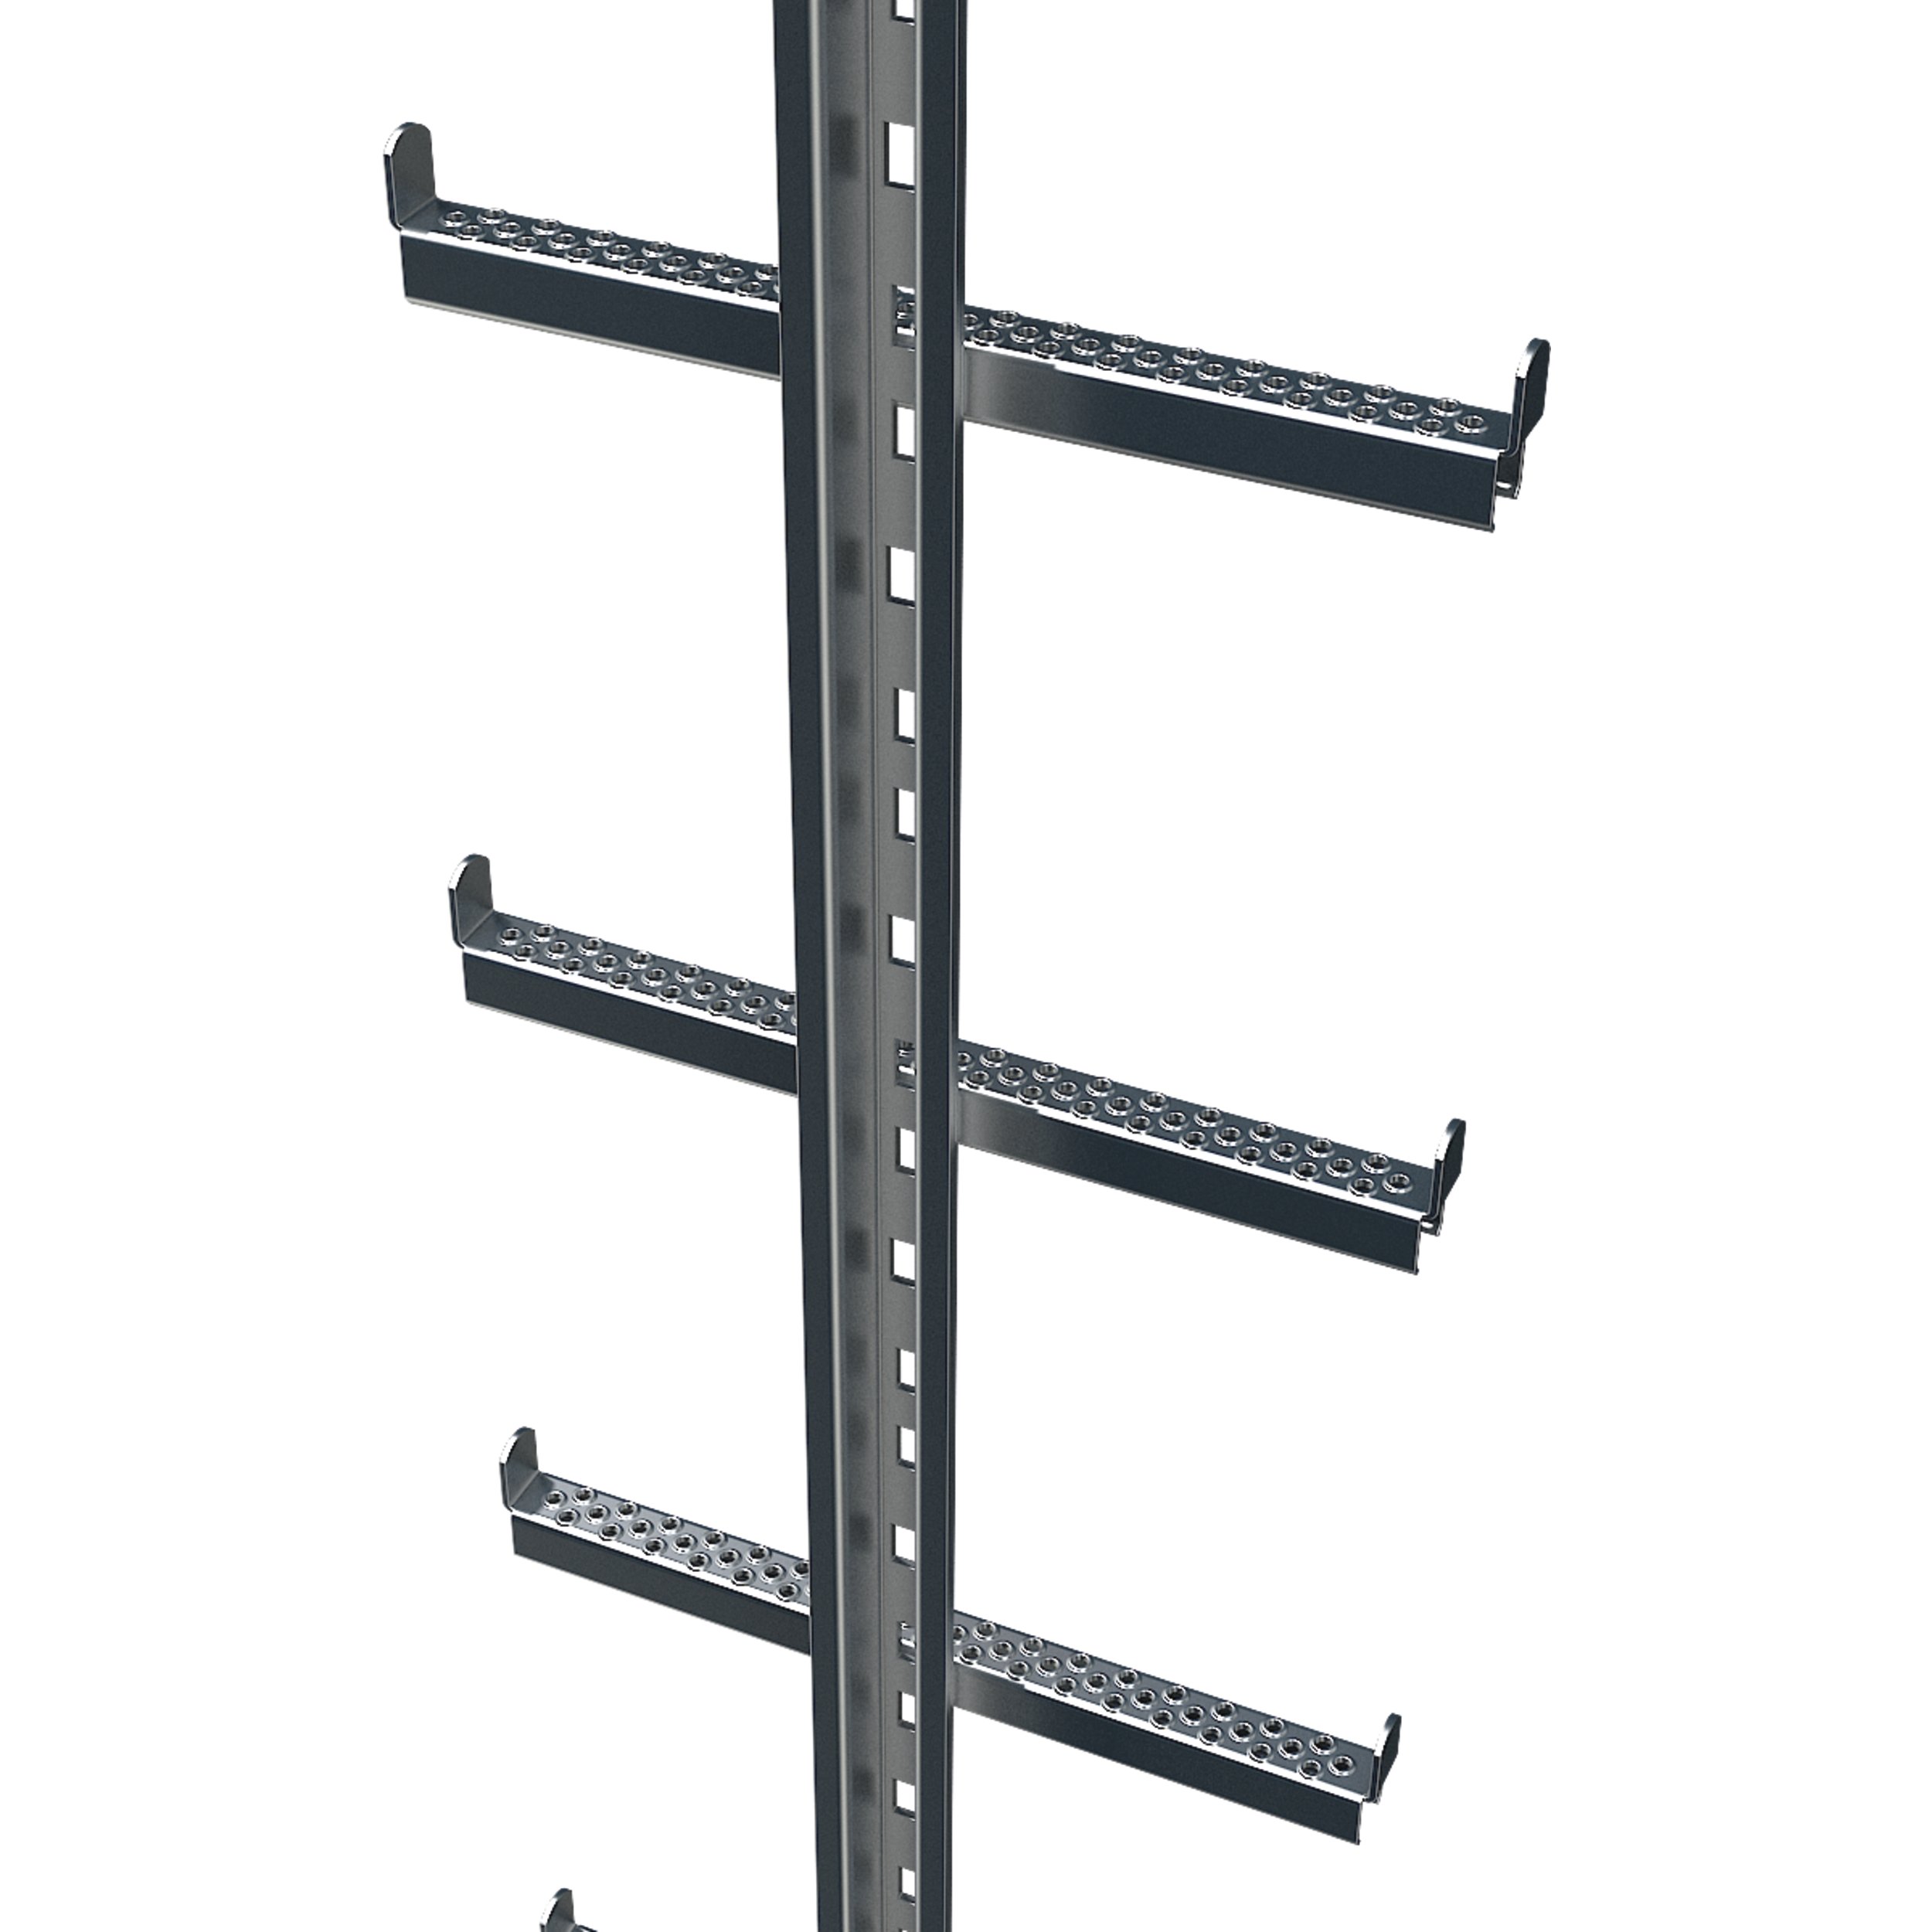 Single-stile ladder with integrated arrester rail. | Fall arrester 